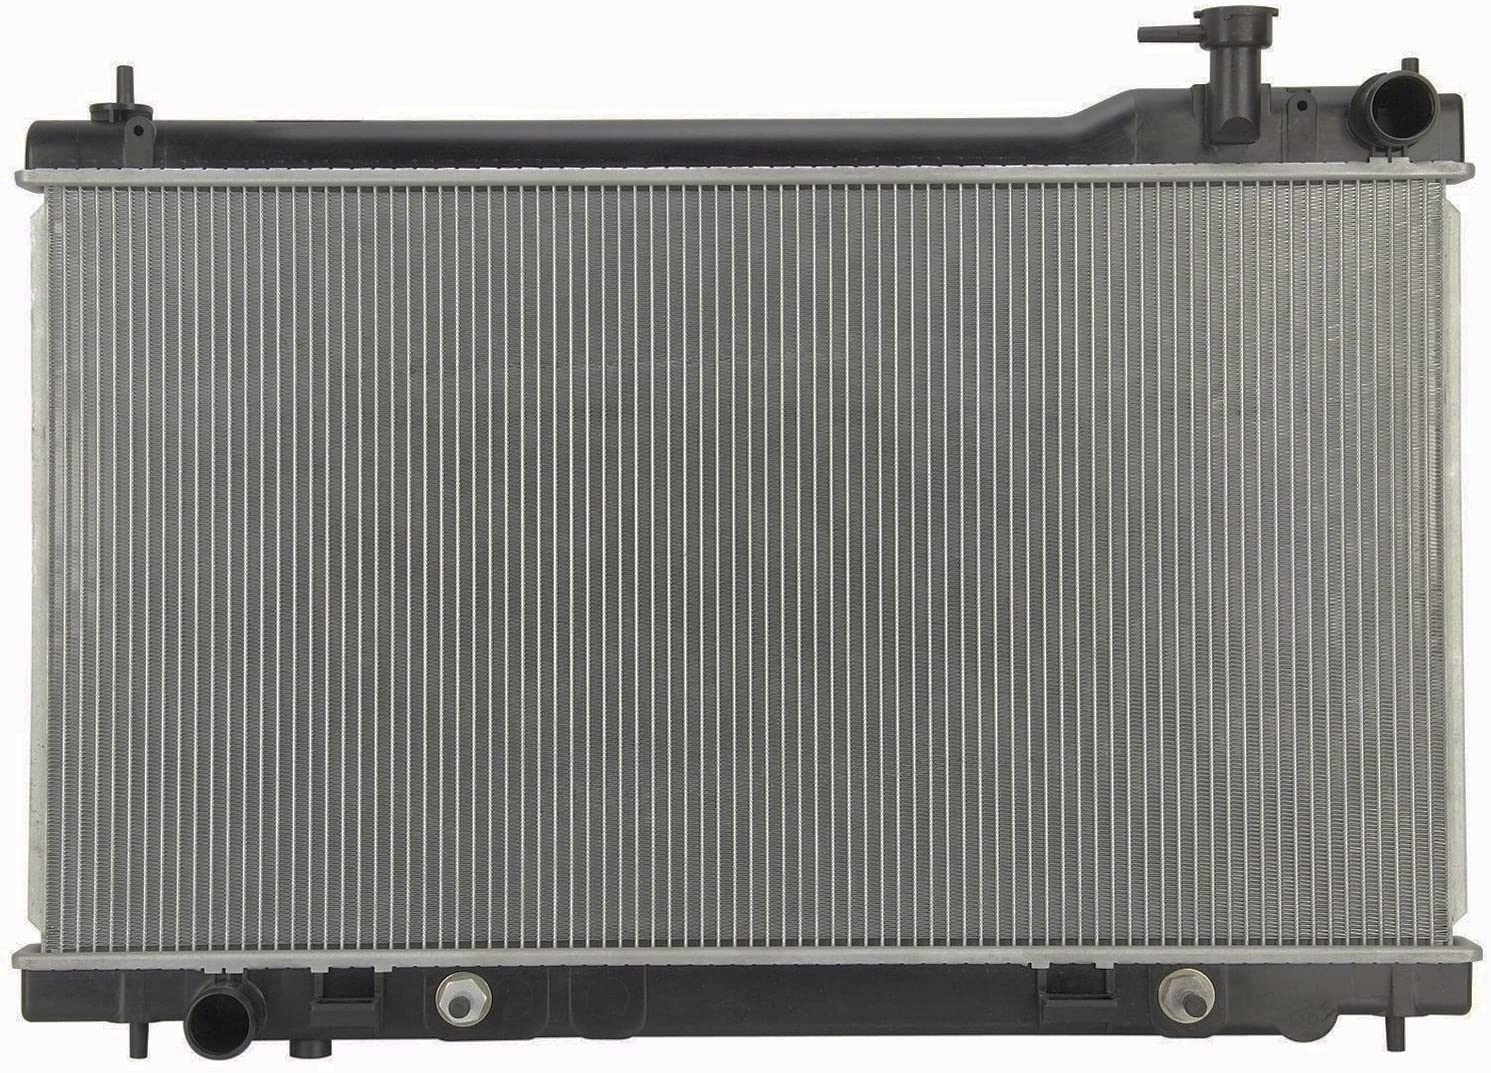 Sunbelt Radiator For Infiniti G35 2588 Drop in Fitment